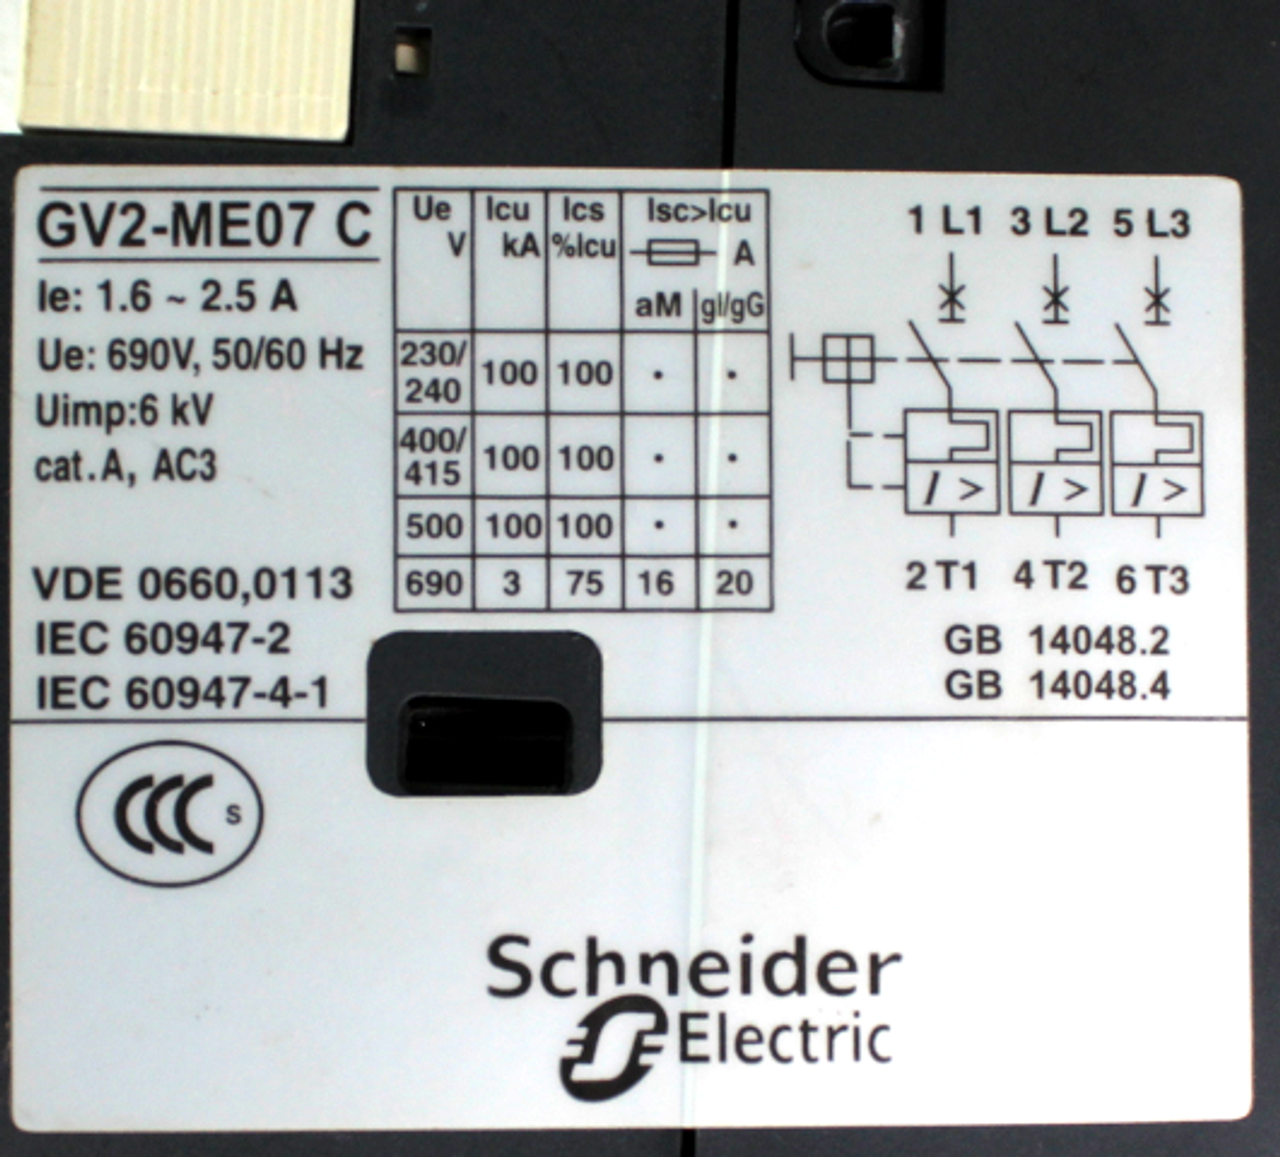 Schneider Electric GV2-ME07 Series C Motor Starter 690V 1.6-2.5A